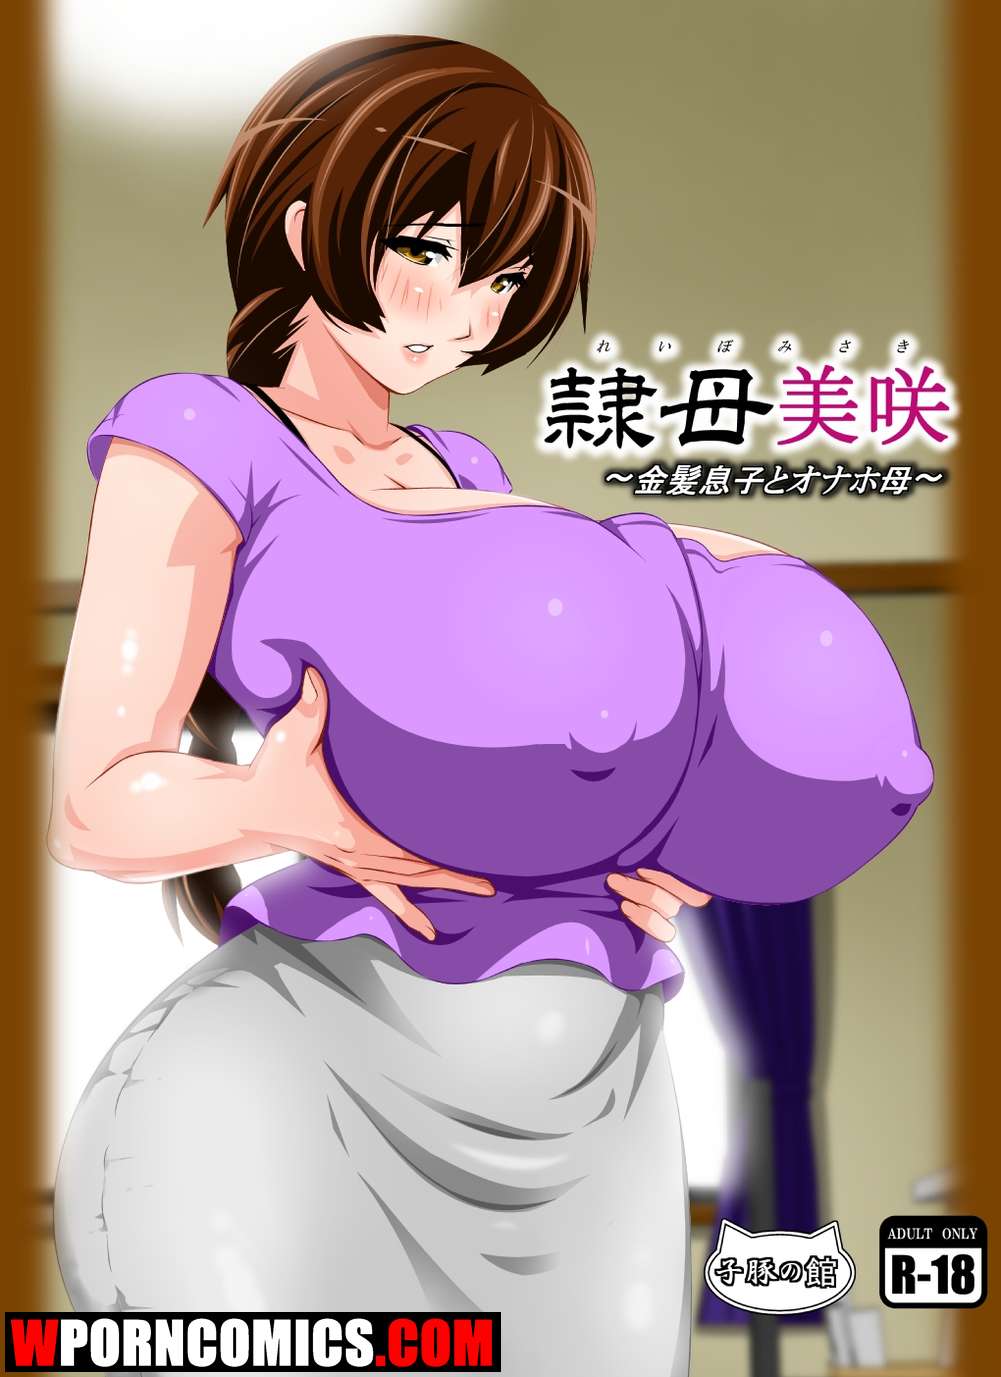 Anime big boobs porn comic